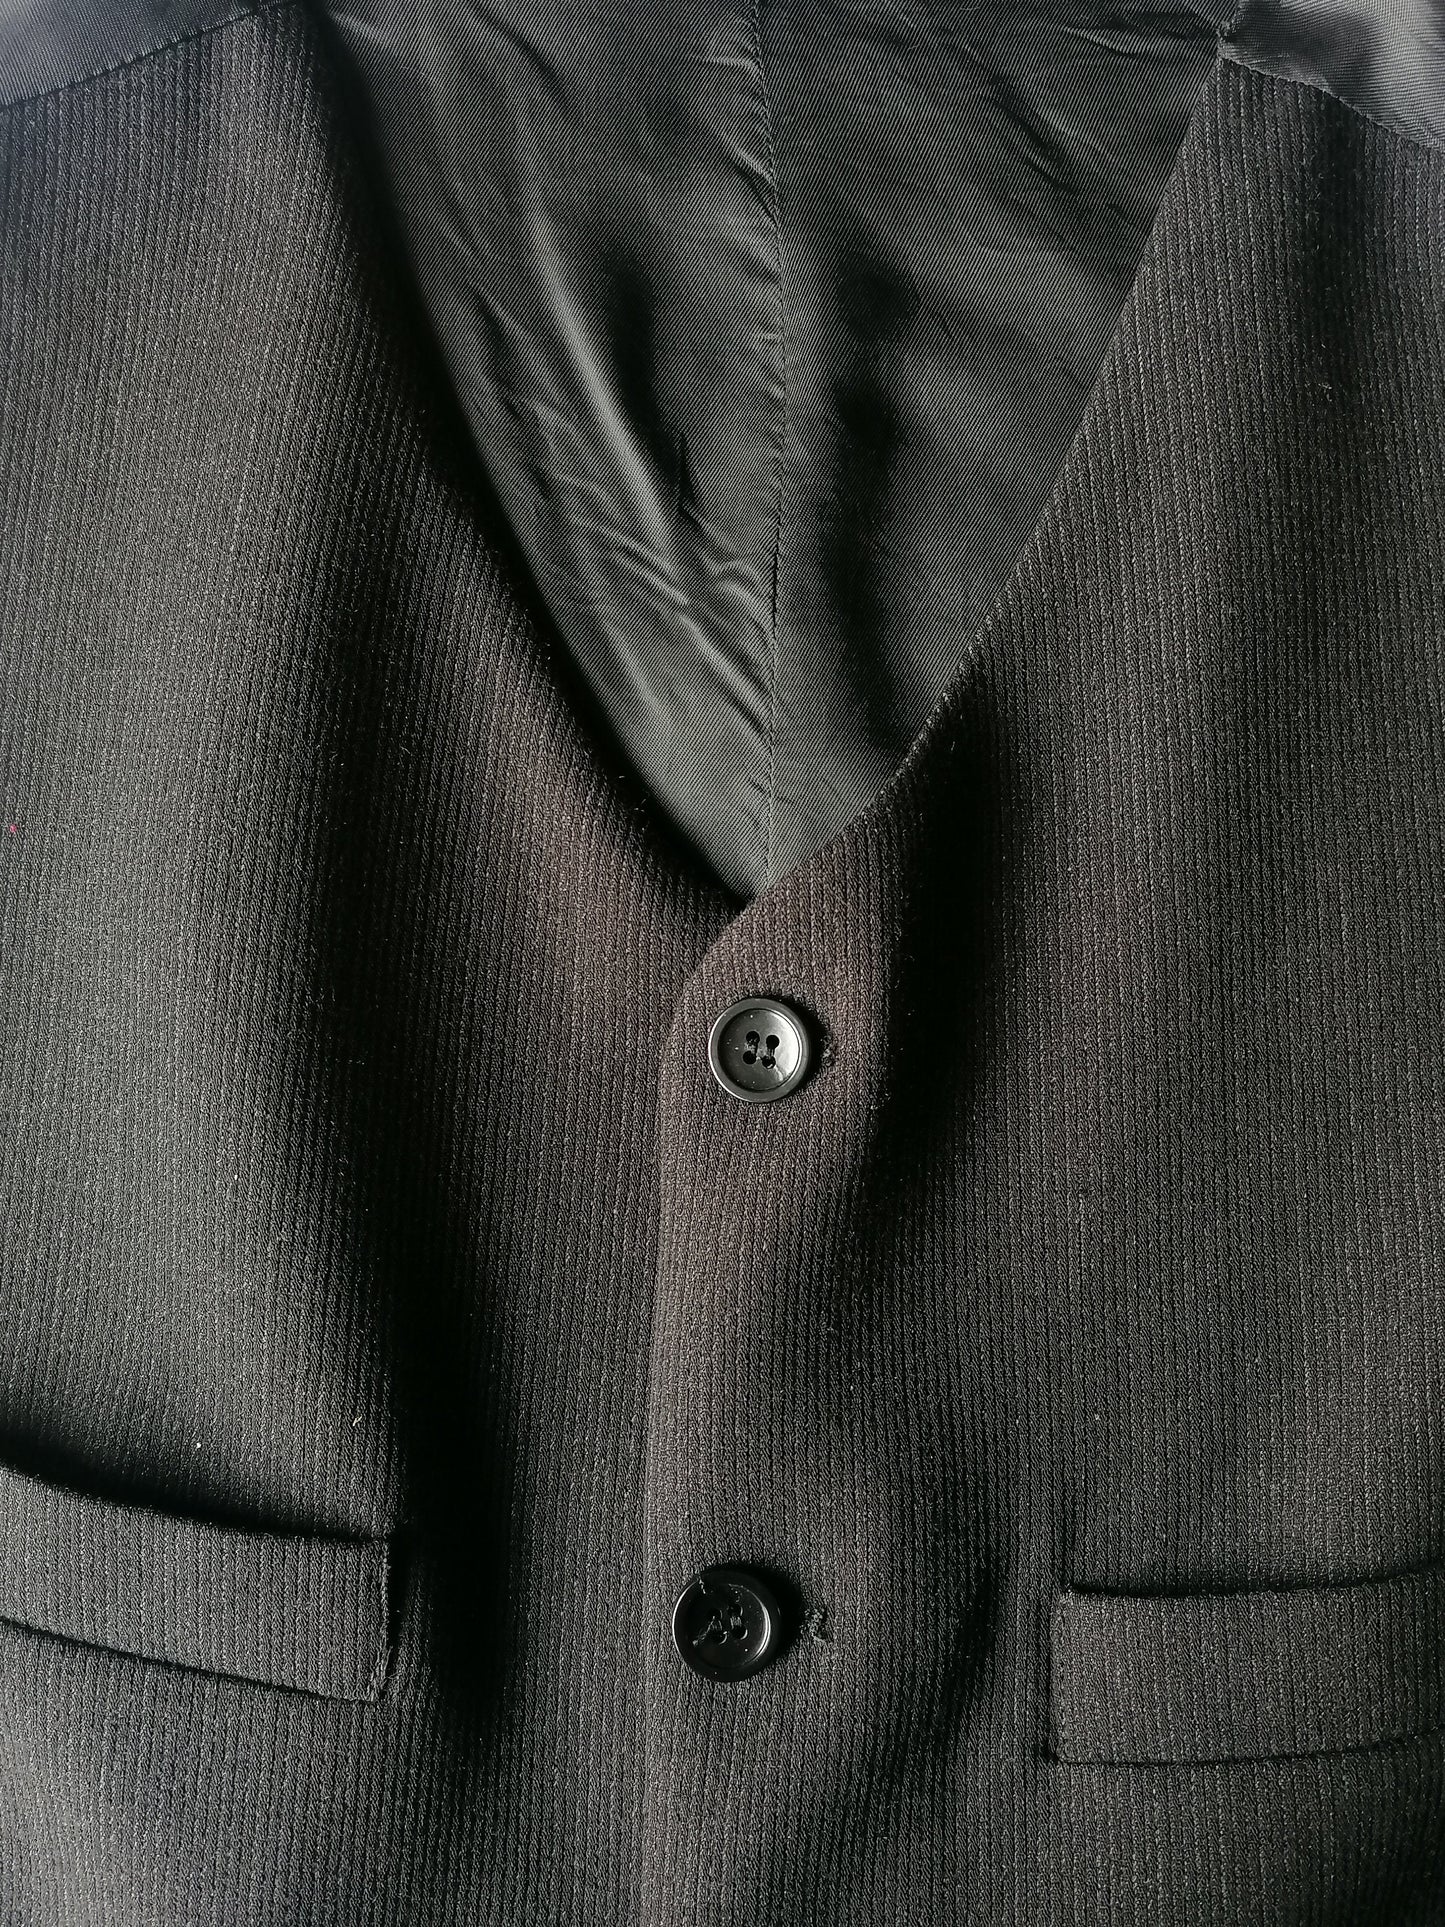 Gilet en laine .. rayé noir. Taille 48 / S. # 295